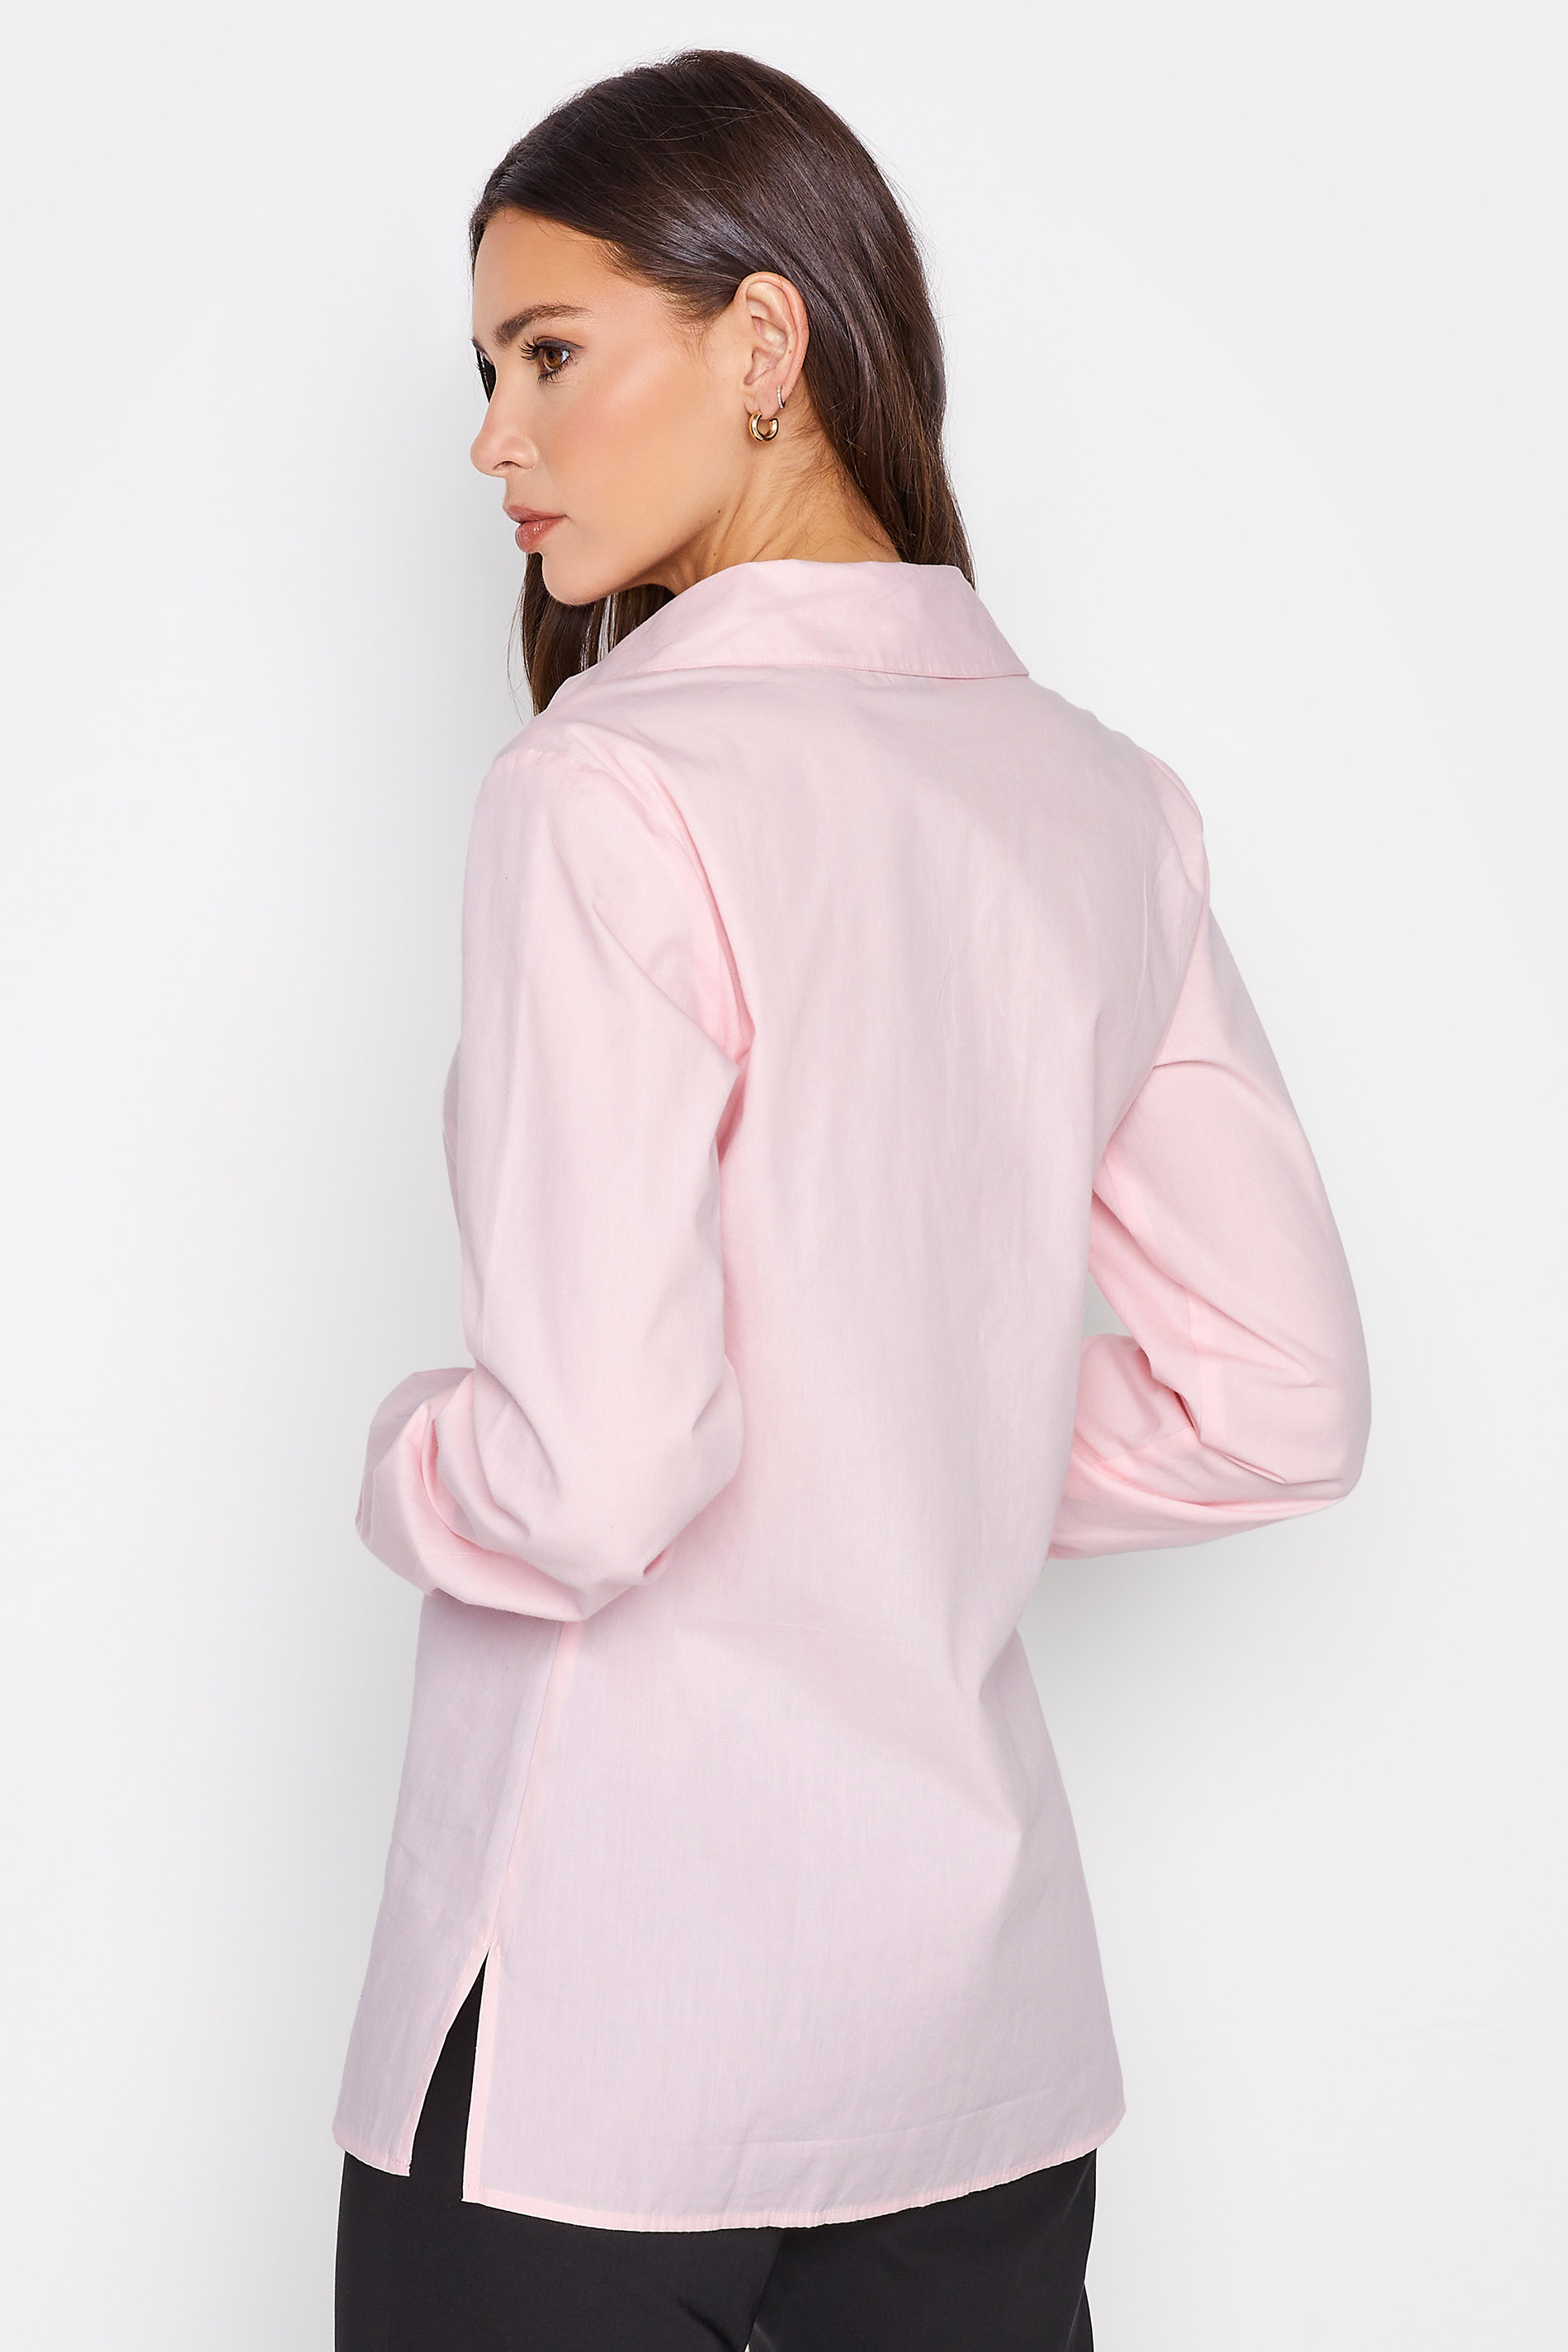 LTS Tall Women's Blush Pink Fitted Cotton Shirt | Long Tall Sally  3